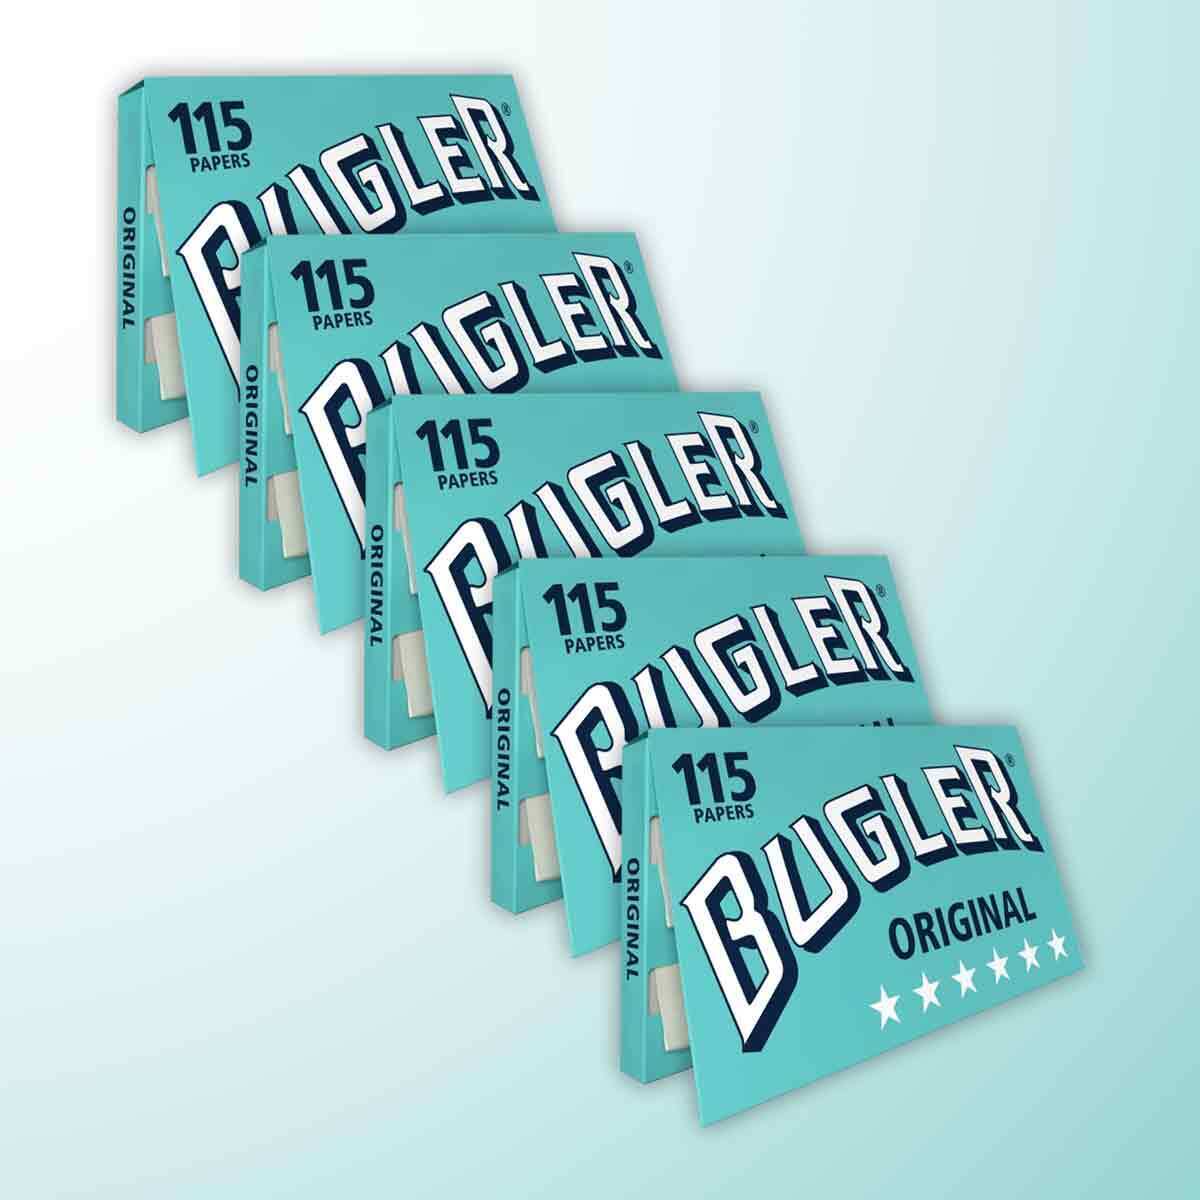 Bugler Cigarette Rolling Papers Original Single Wide 70mm (575 Leaves) 5 Packs